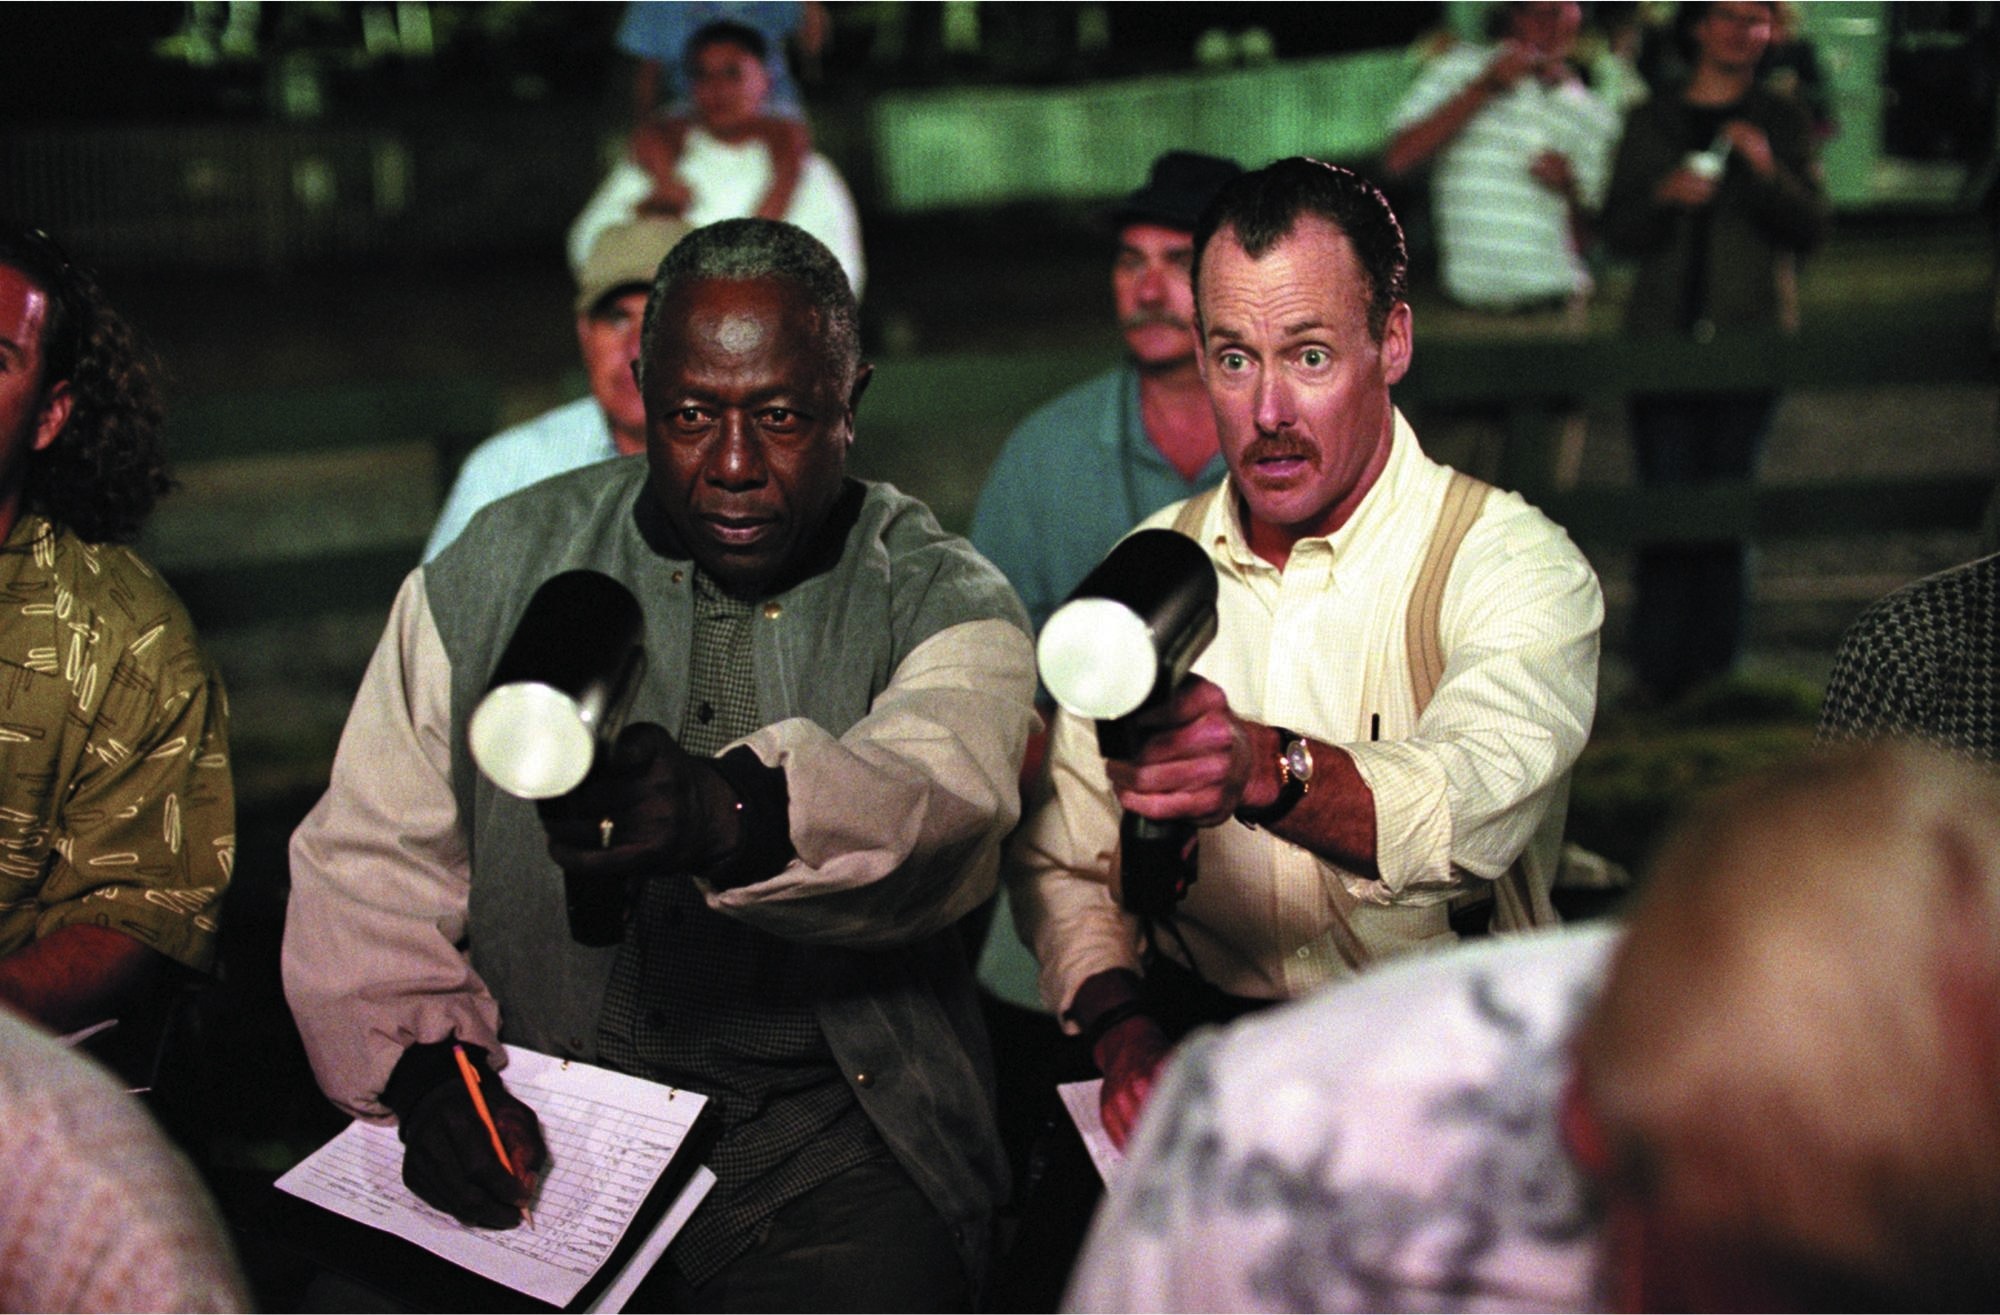 Still of John C. McGinley and Hank Aaron in Summer Catch (2001)